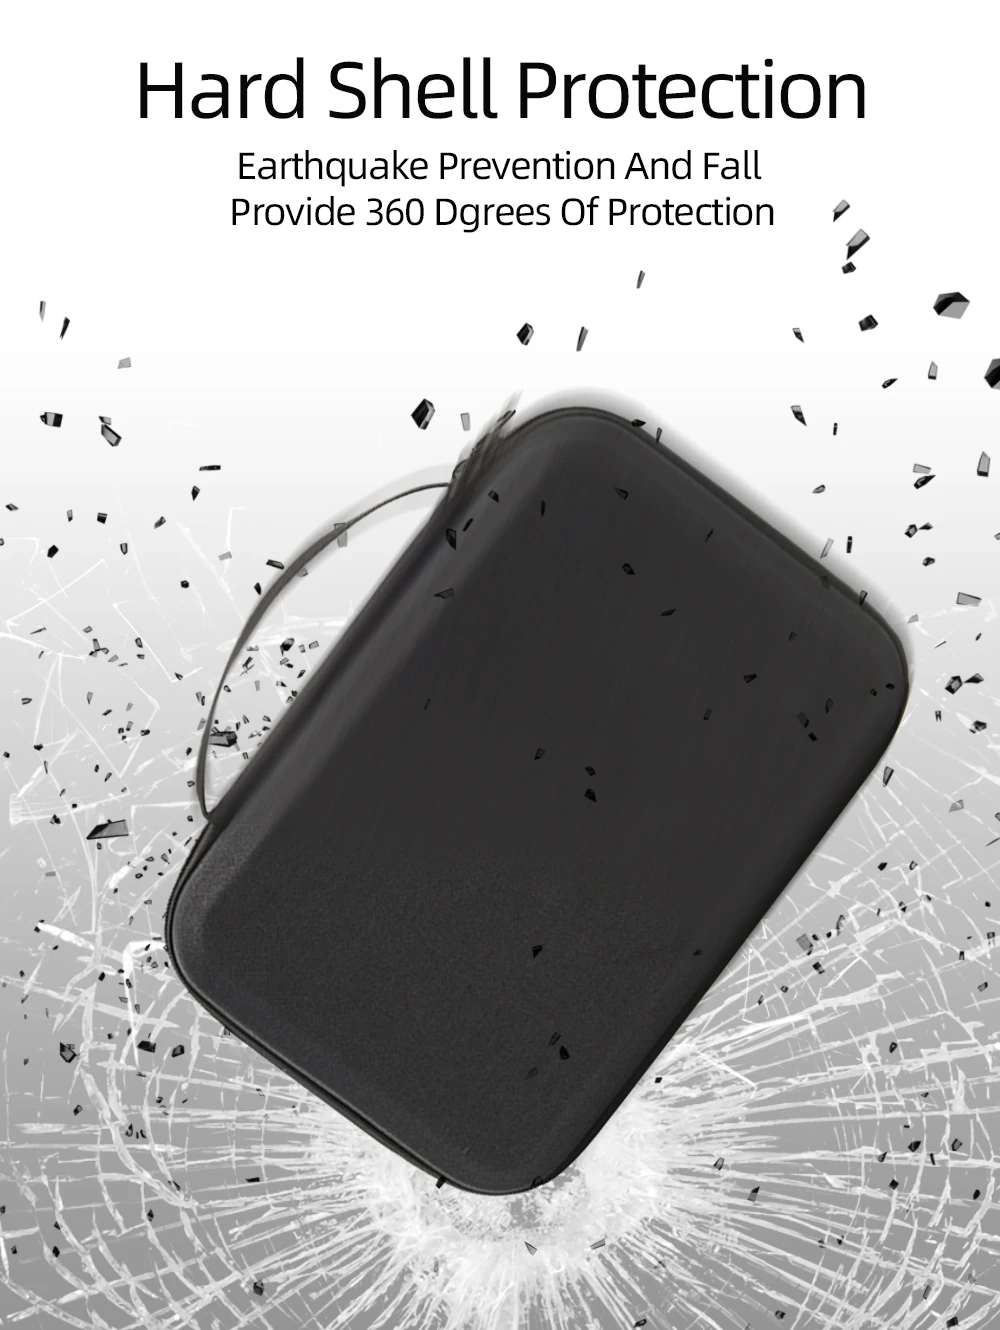 for DJI Mini Se Case Shockproof Carrying Bag Remote Control Body for Mini Se Storage Box Travel Handbag Accessories